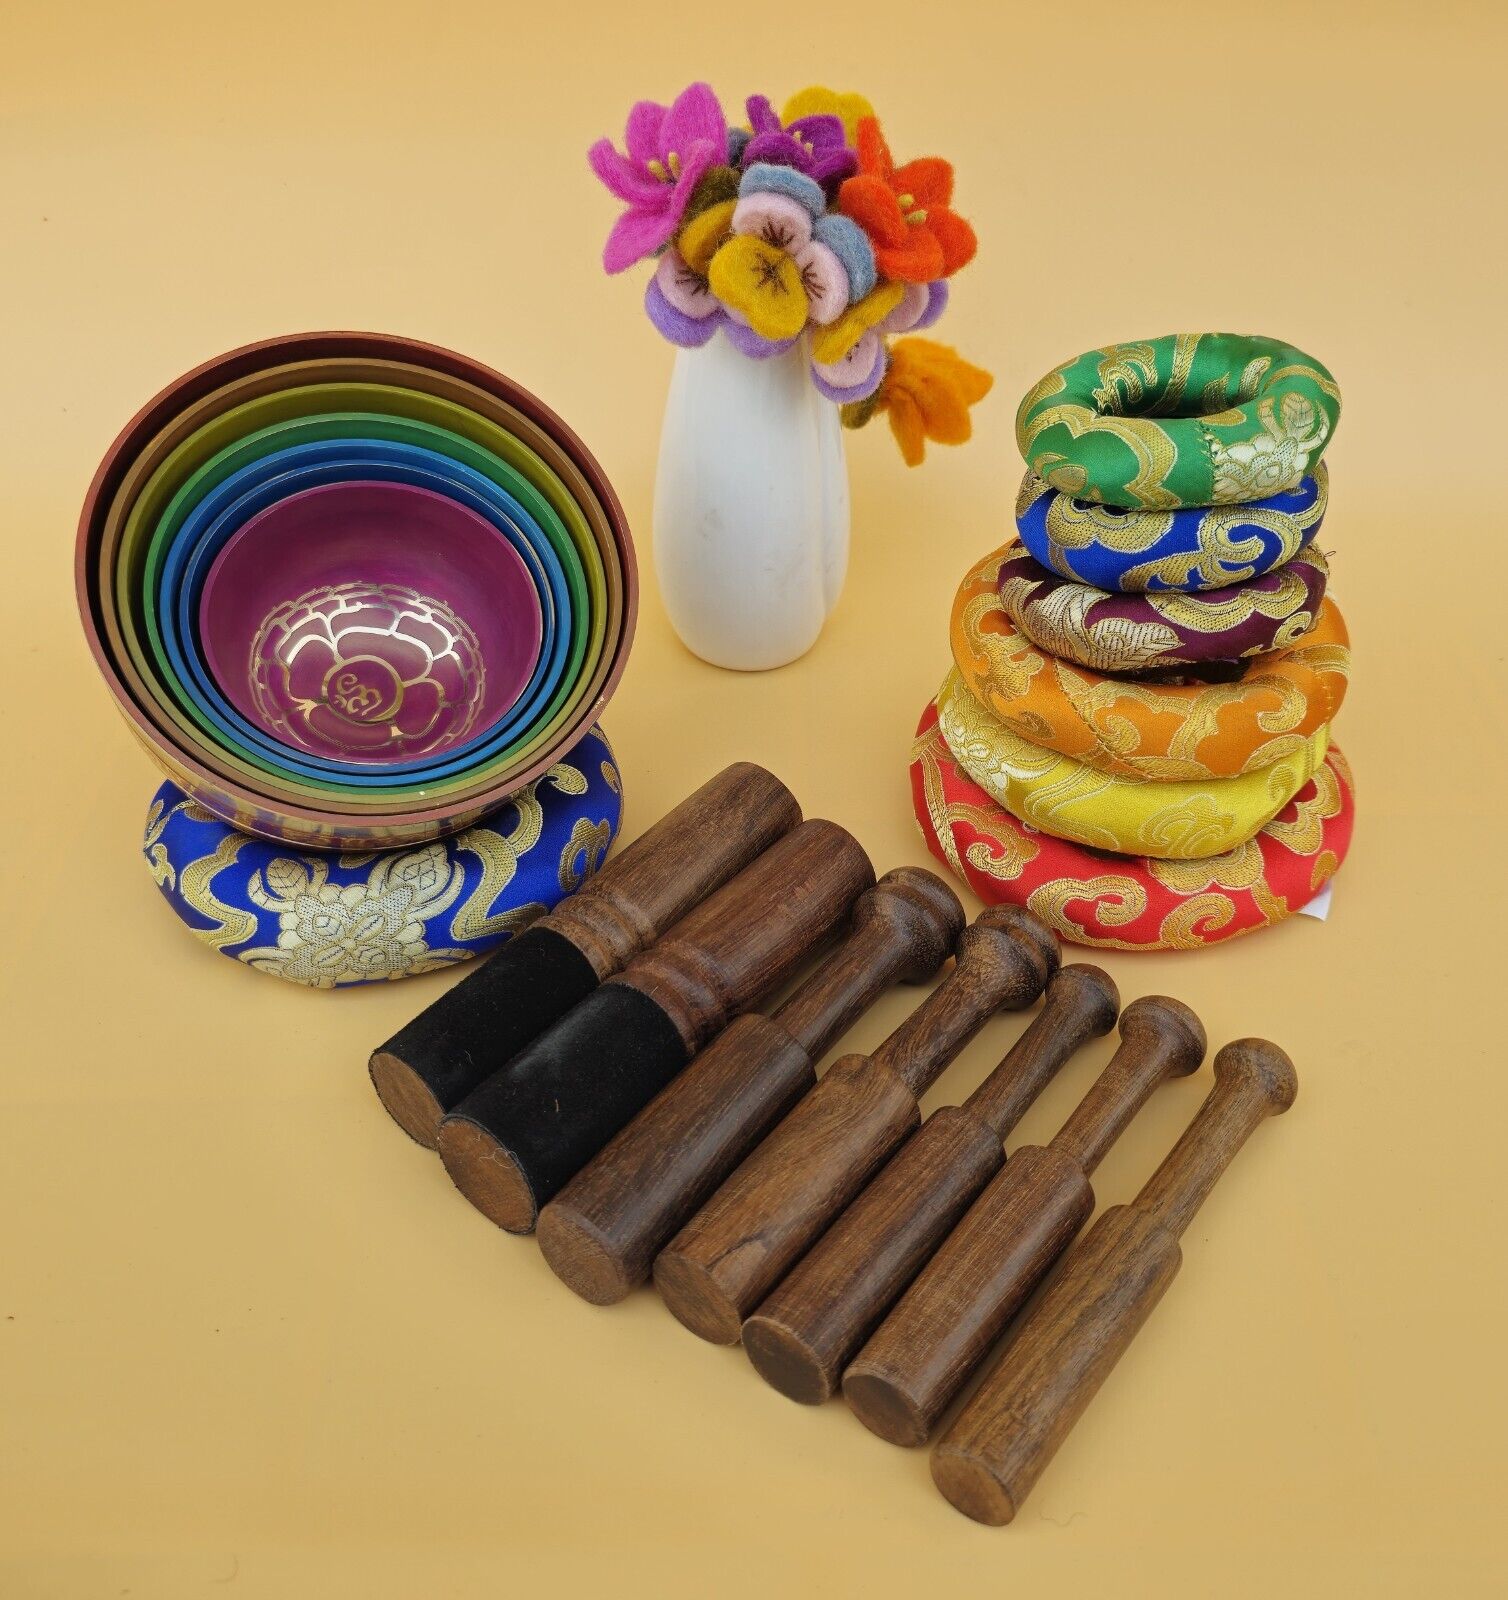 Seven Color Chakra Tibetan Singing Bowls Set - 7 pieces healing set - Great use